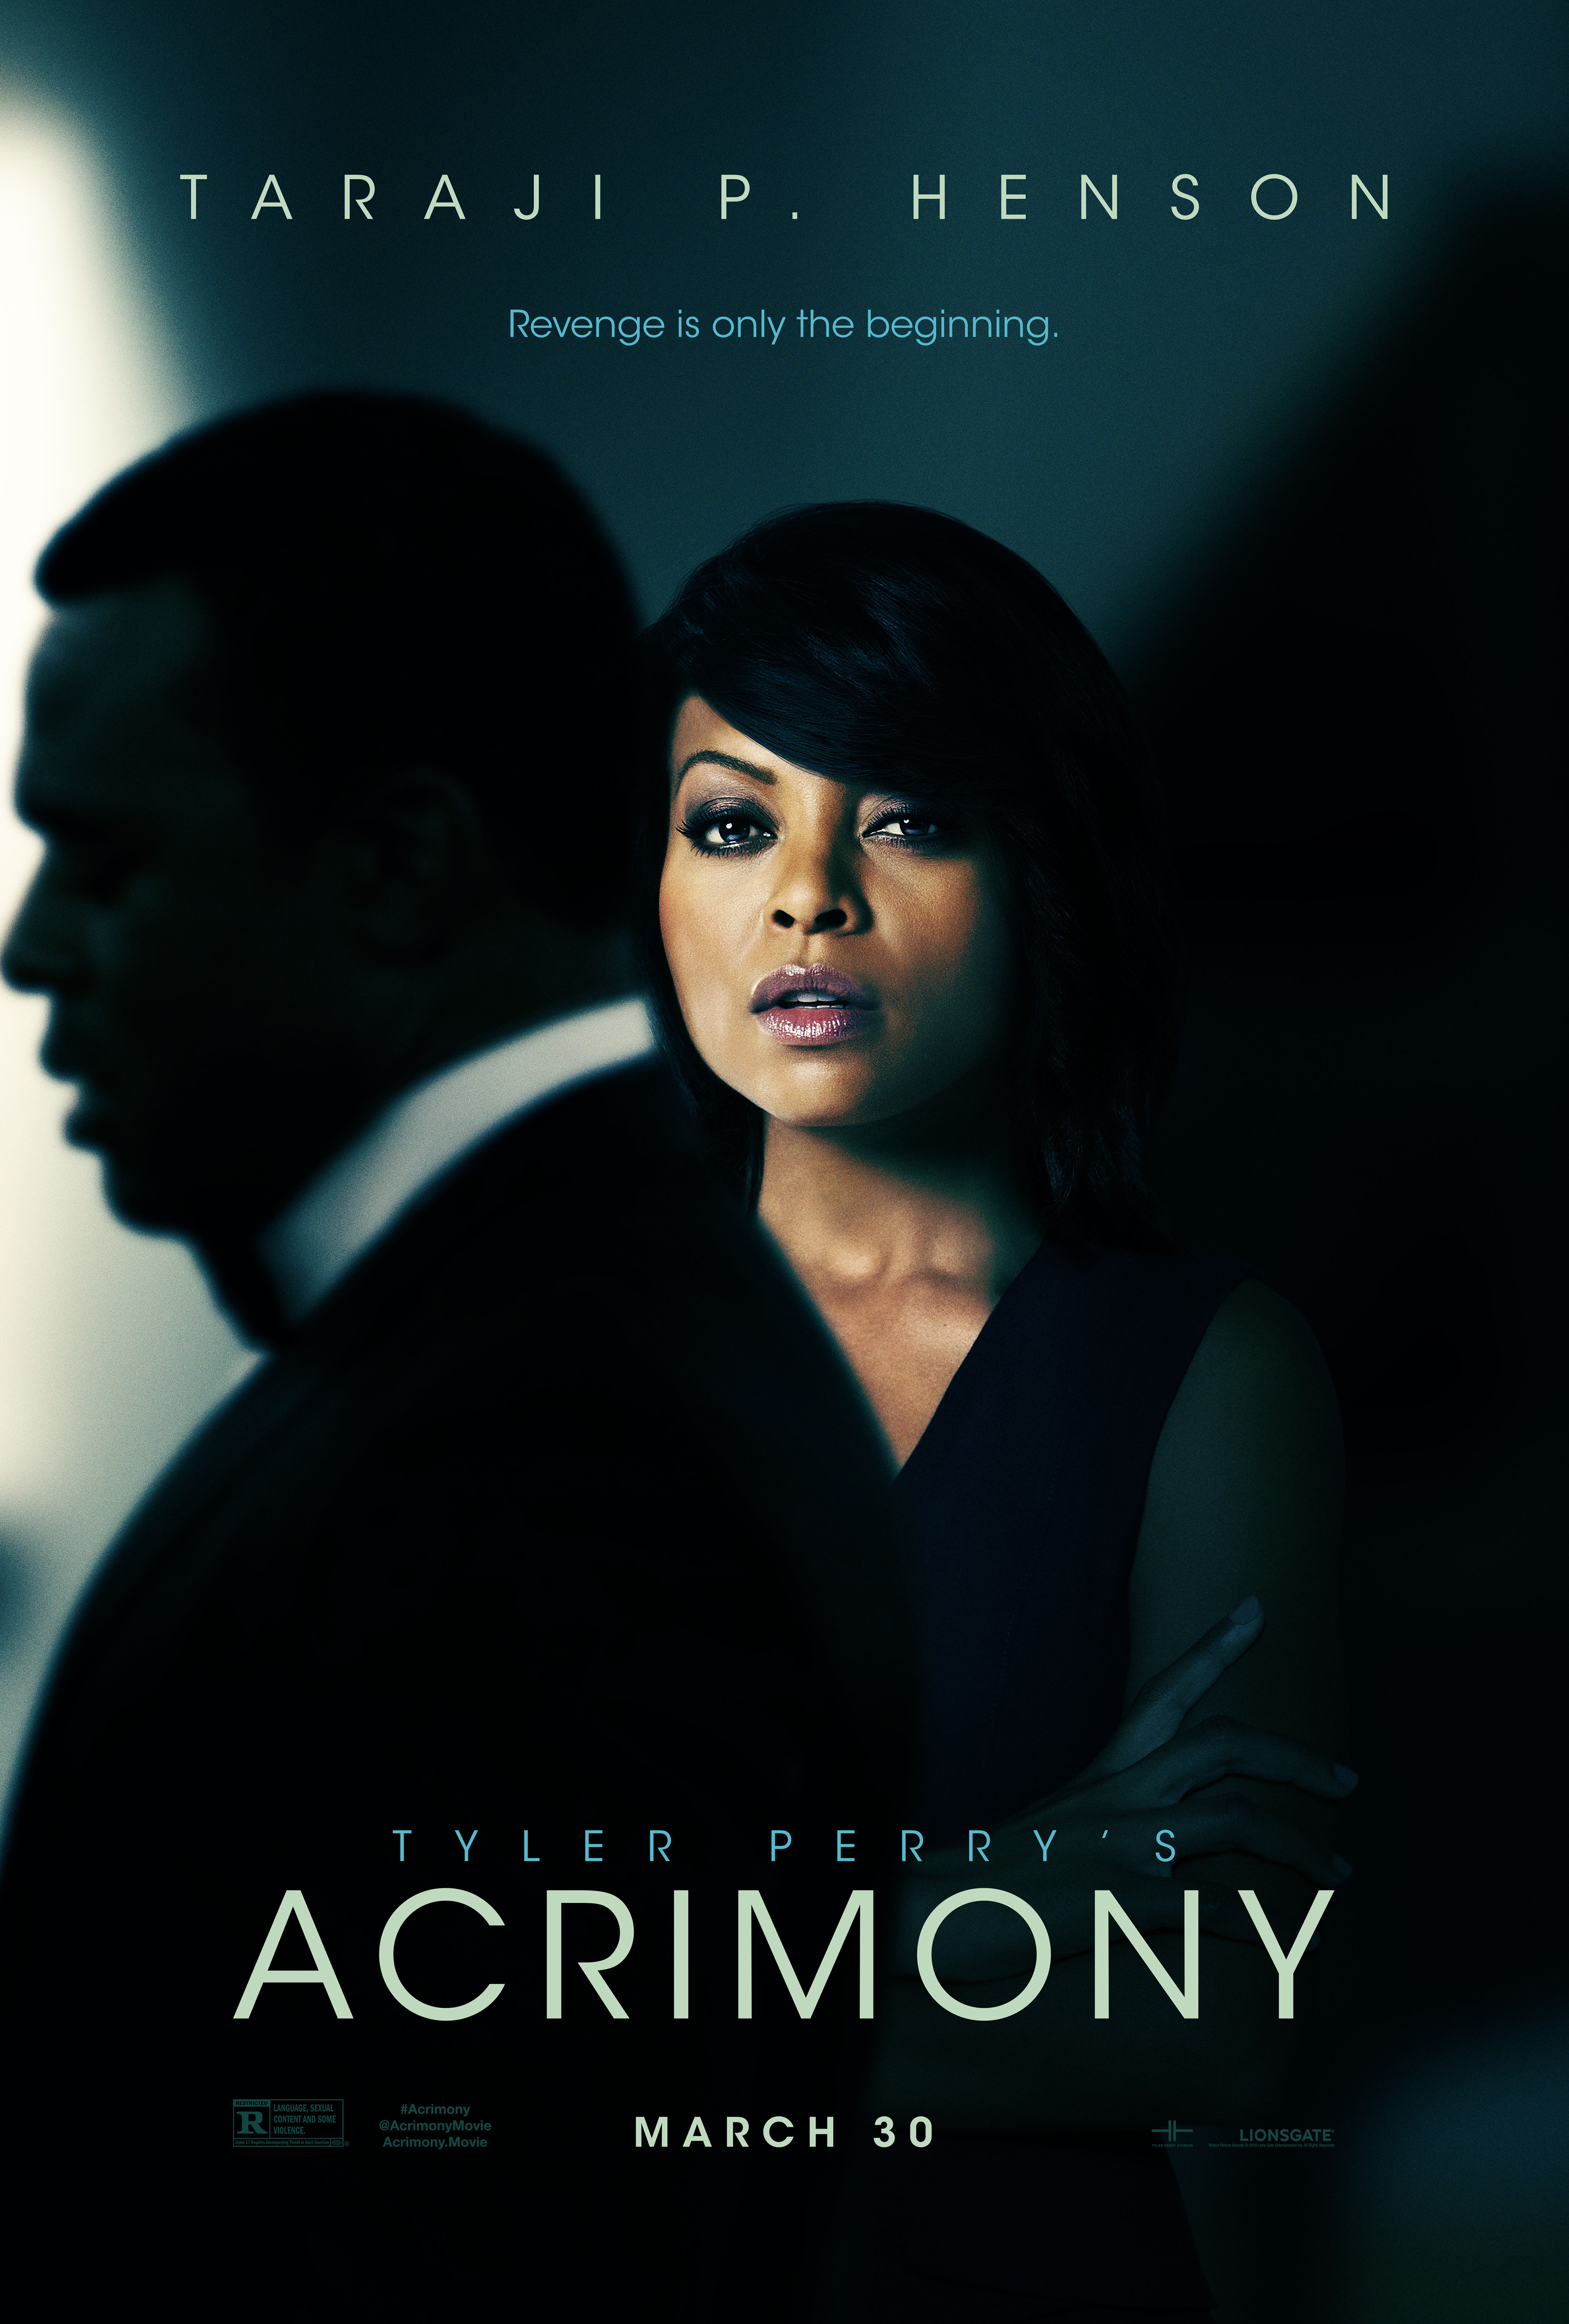 Acrimony poster (Lionsgate)